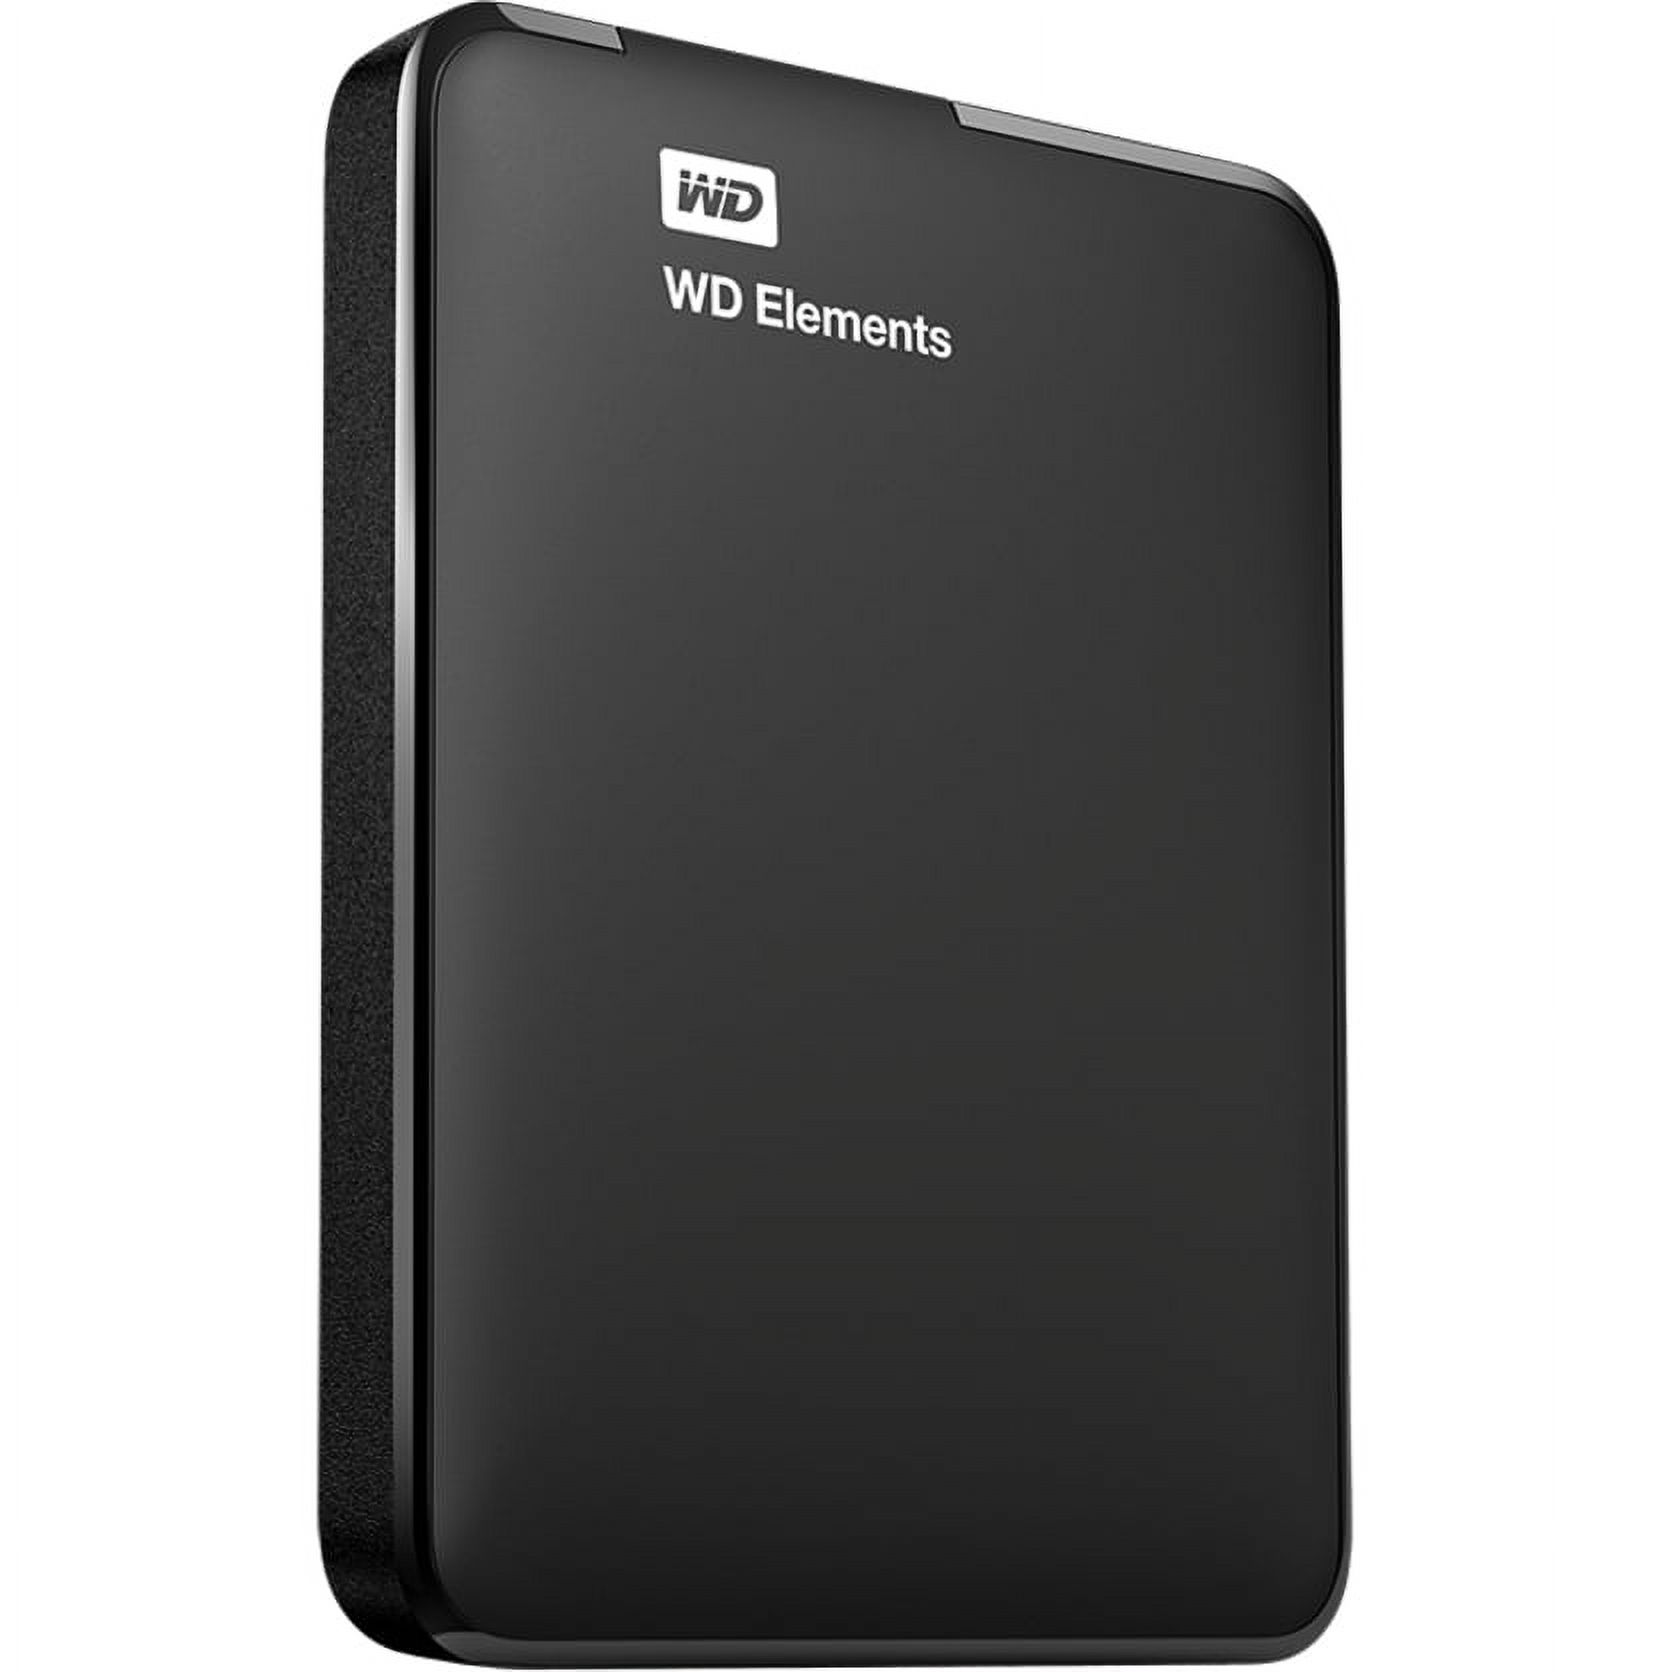 WD 1TB Elements Portable External Hard Drive - USB 3.0 - WDBUZG0010BBK-NESN - image 4 of 4